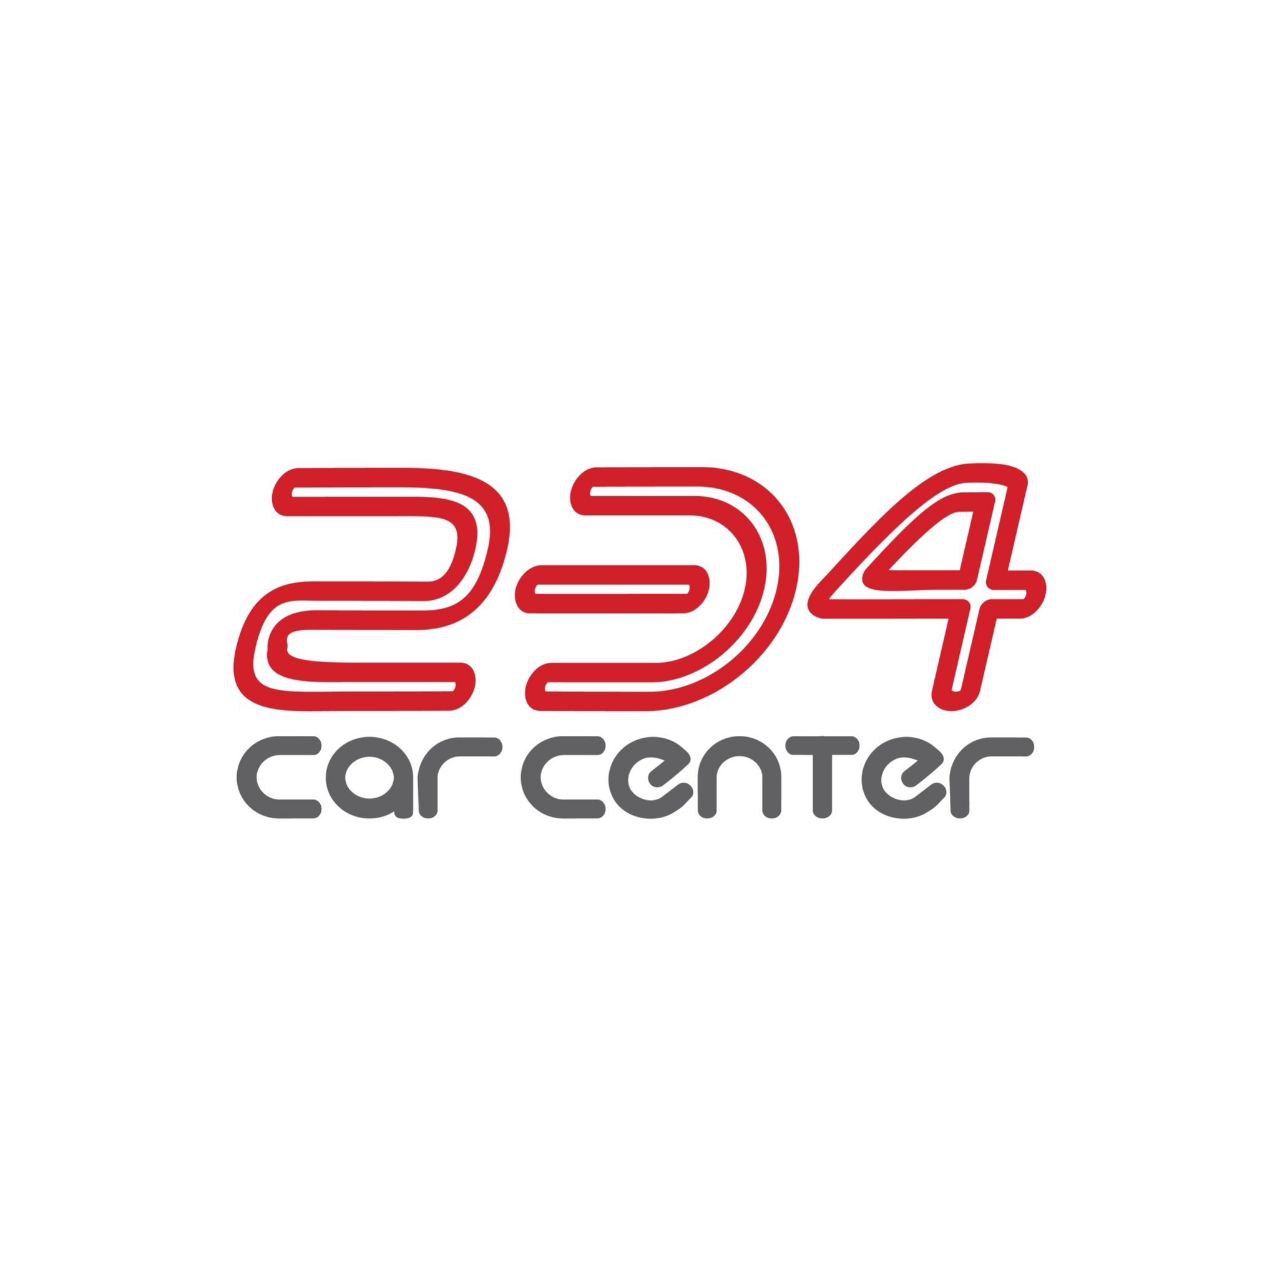 234 carcenter